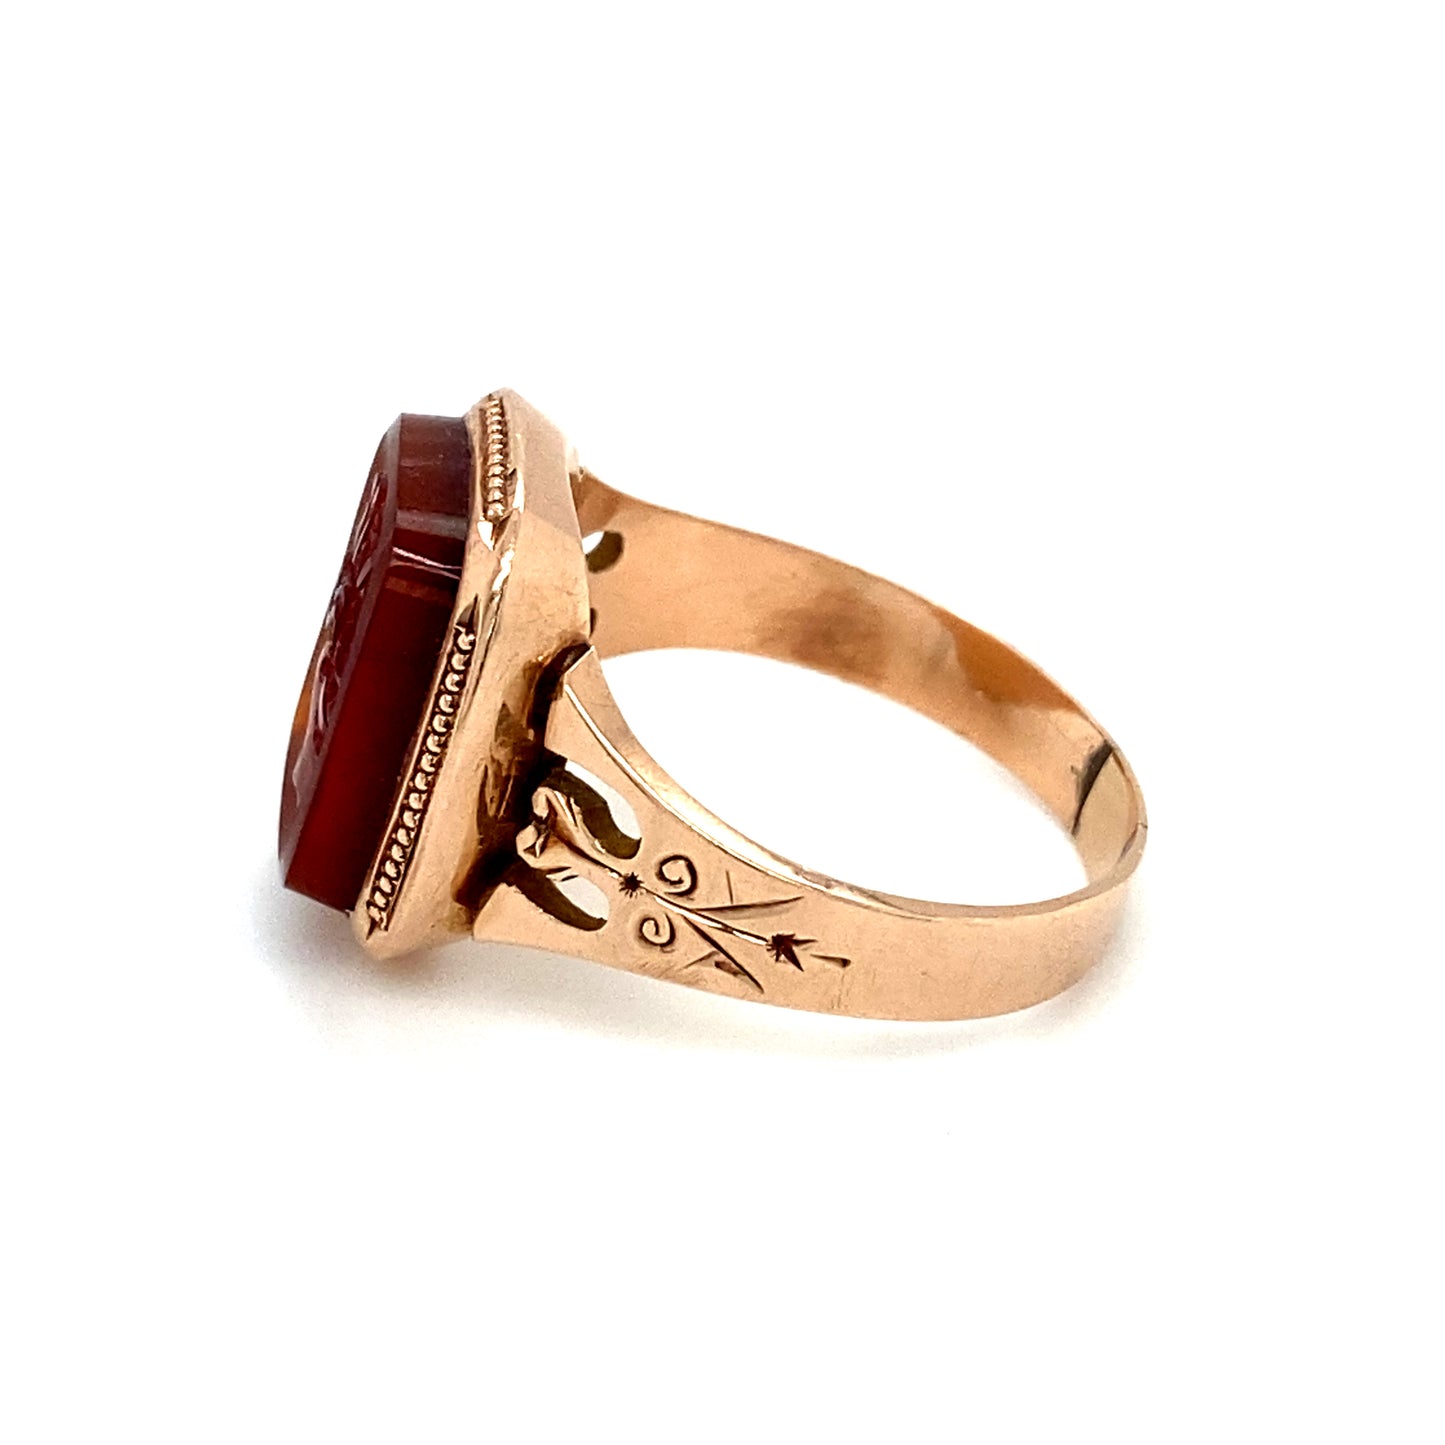 Circa 1910s Edwardian Carnelian Intaglio Ring in 14K Rose Gold